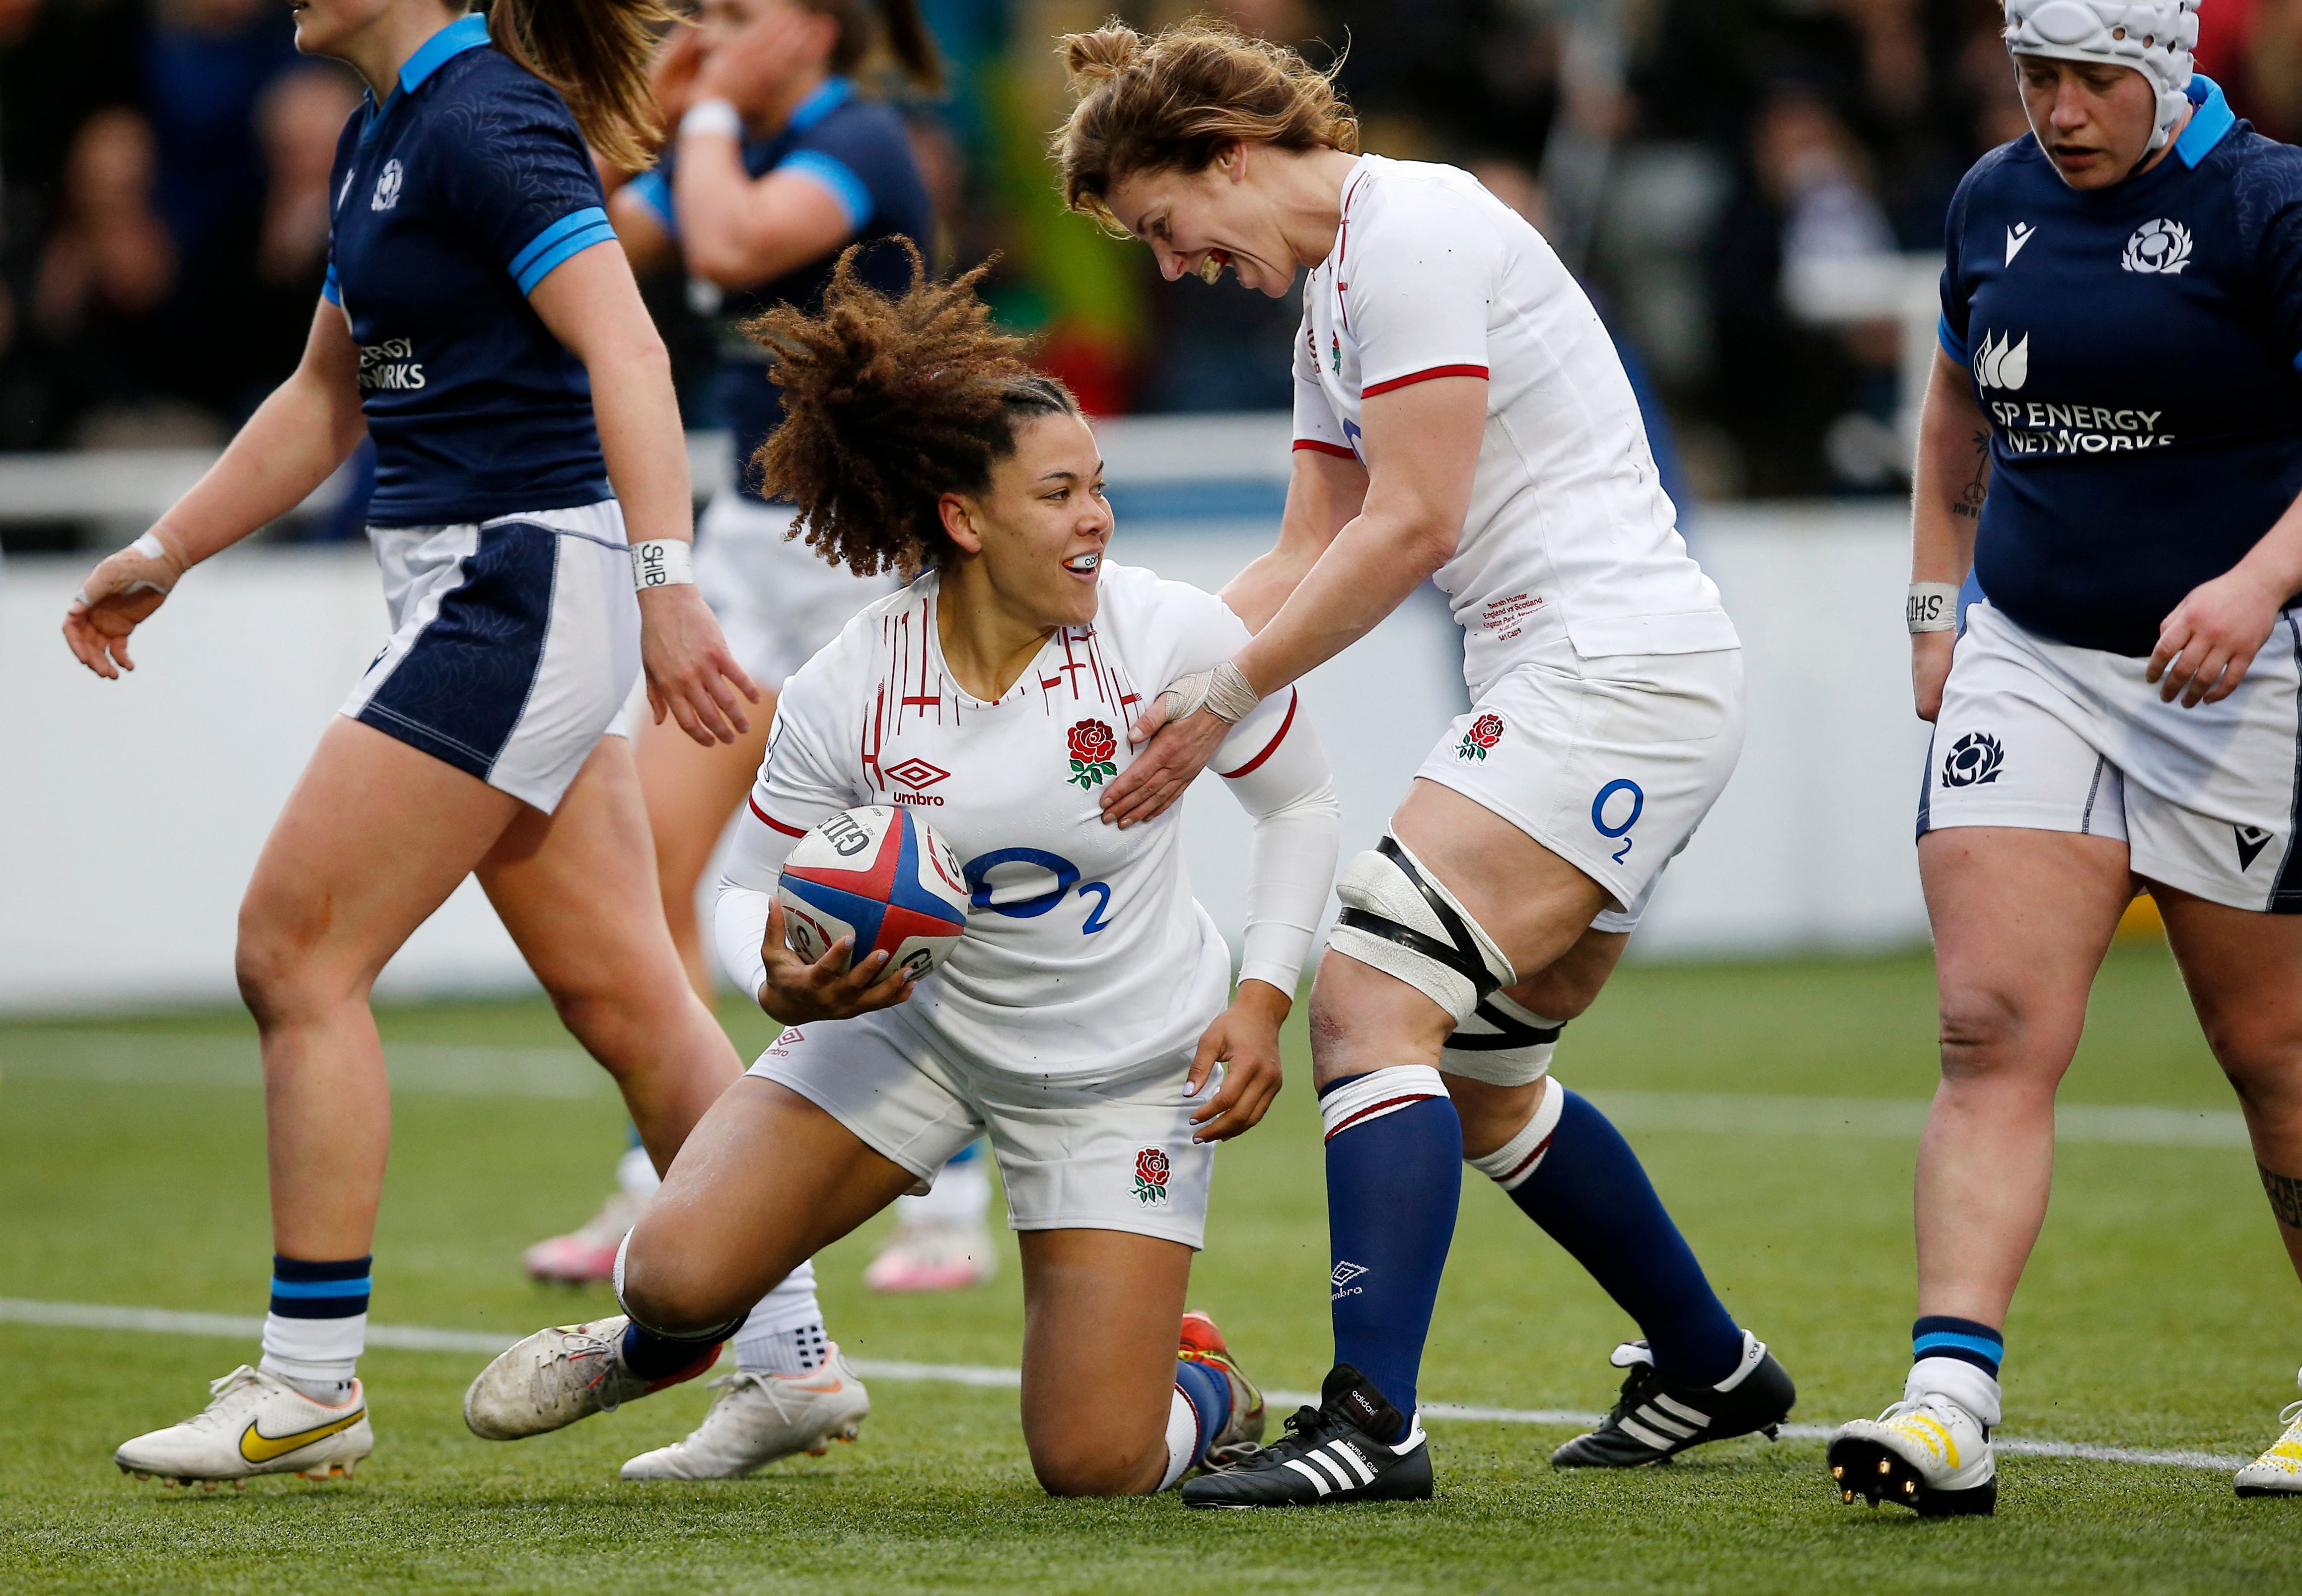 Tatyana Heard scored her first international try against Scotland in England’s Women’s Six Nations opener